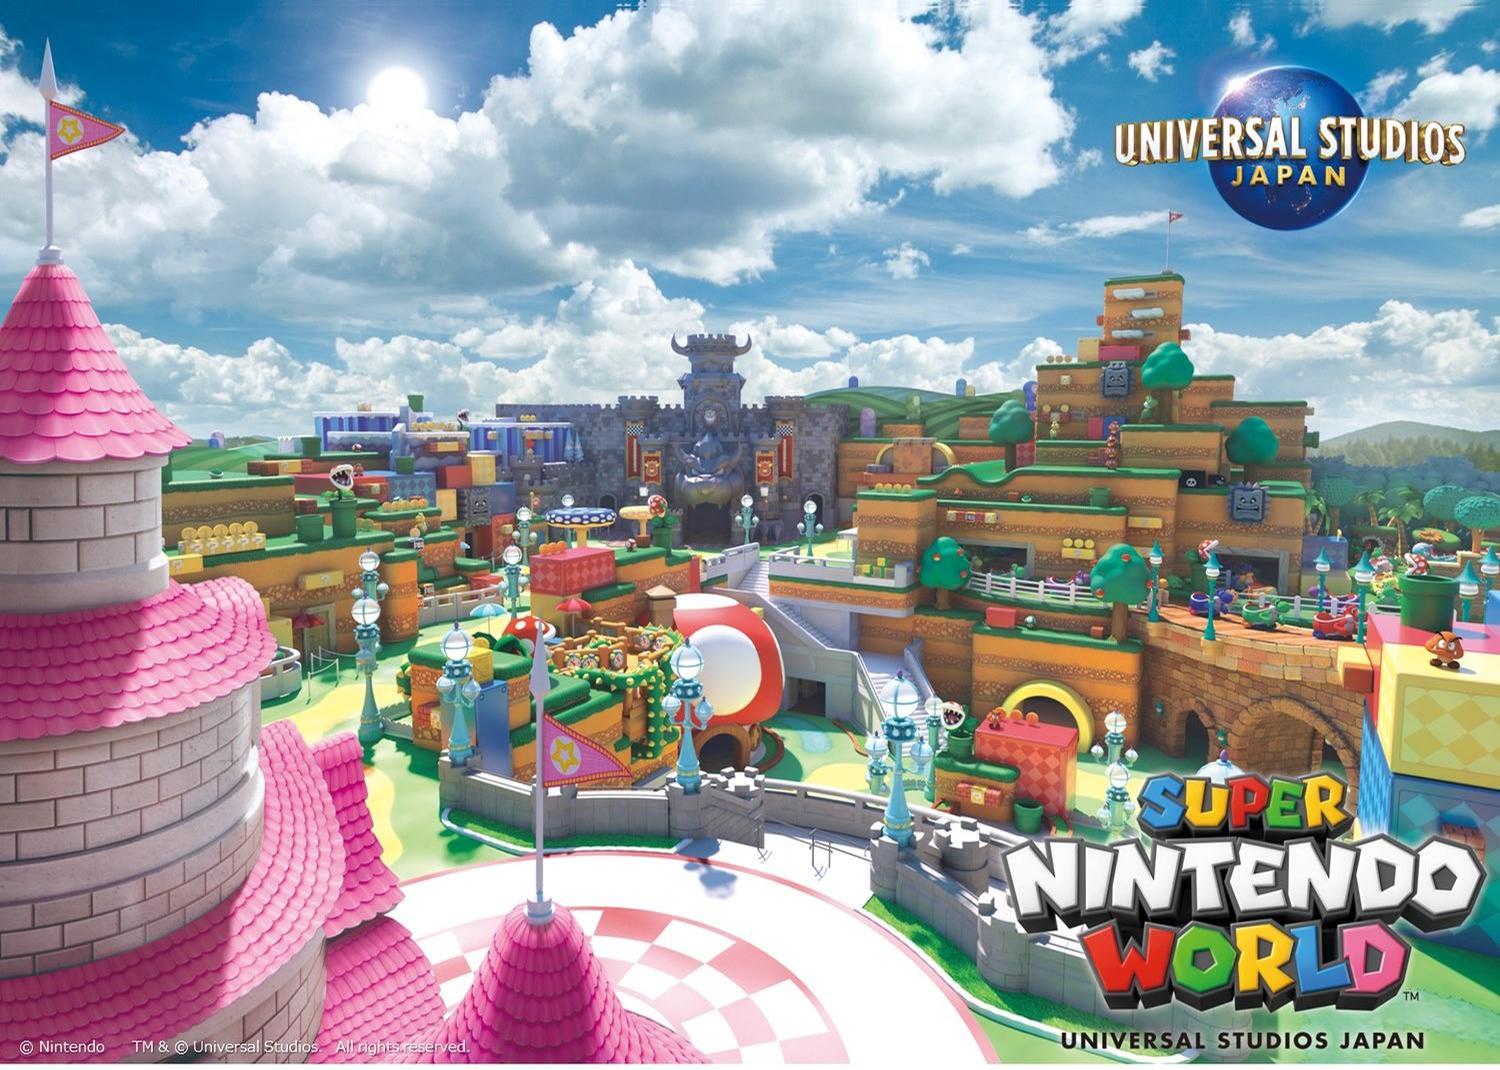 Universal released this conceptual image of Super Nintendo World in November 2019 / Nintendo / Universal Studios Japan